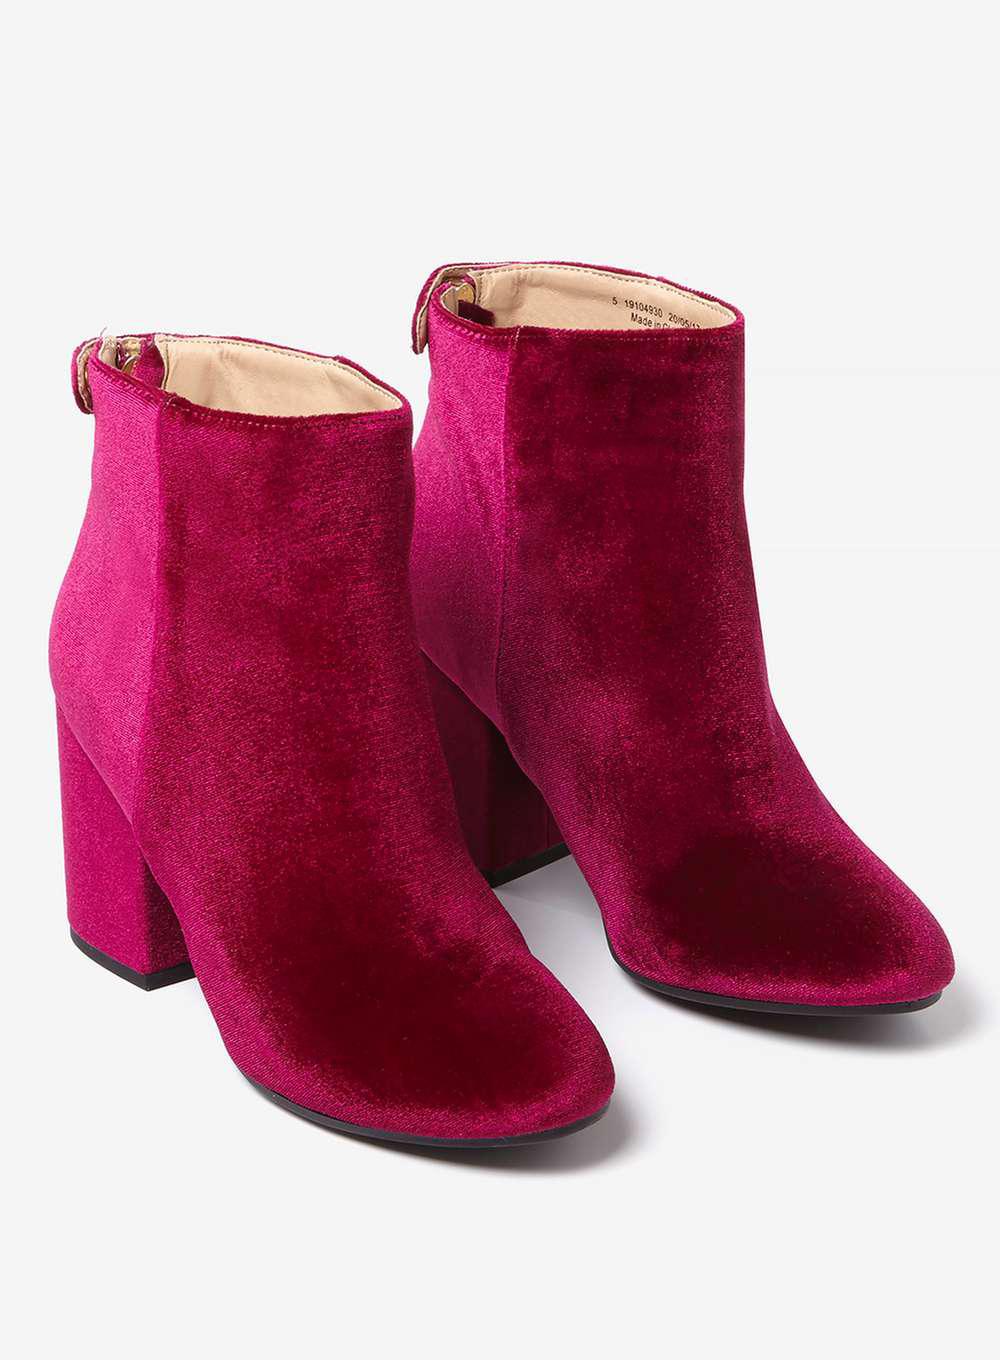 dorothy perkins pink boots